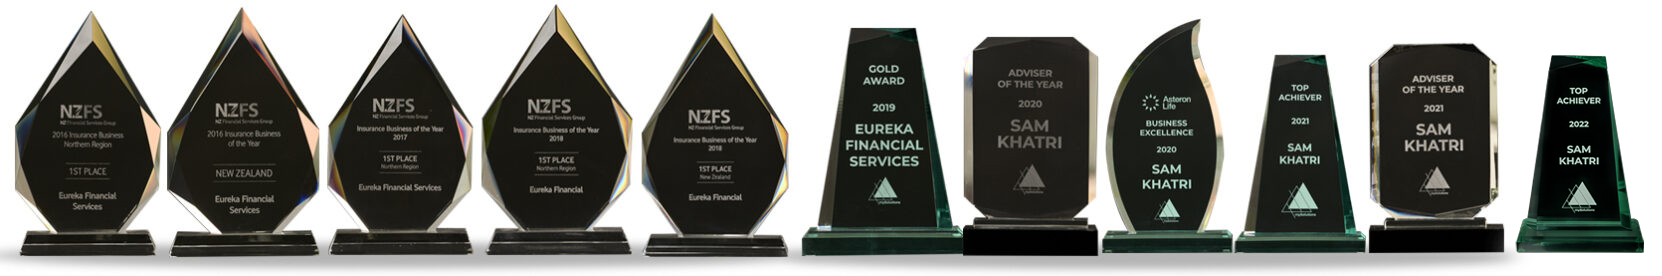 Eureka-Financial-Services Awards NZ